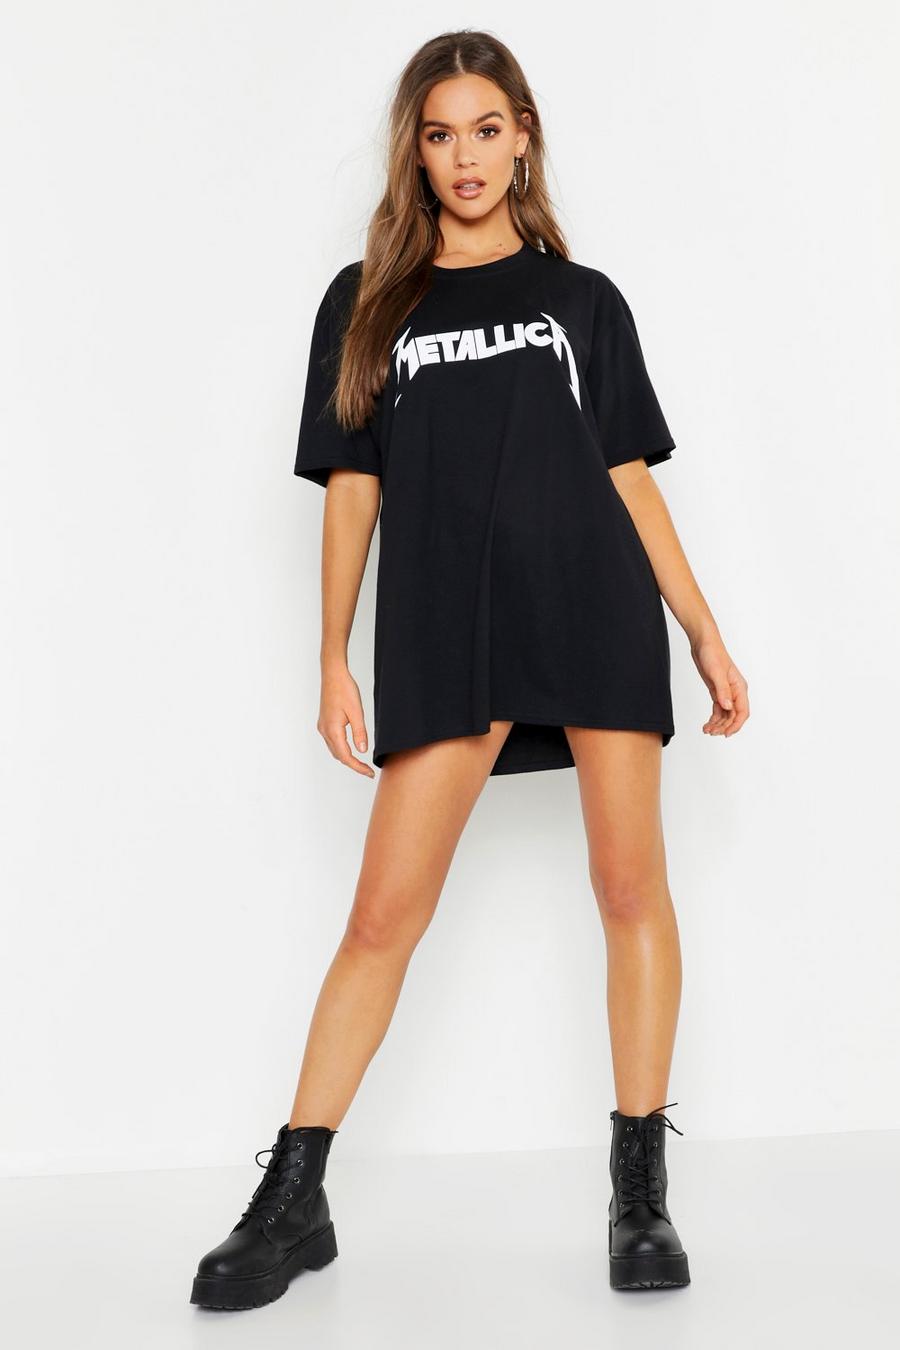 Black Metallica License Oversized T-Shirt Dress